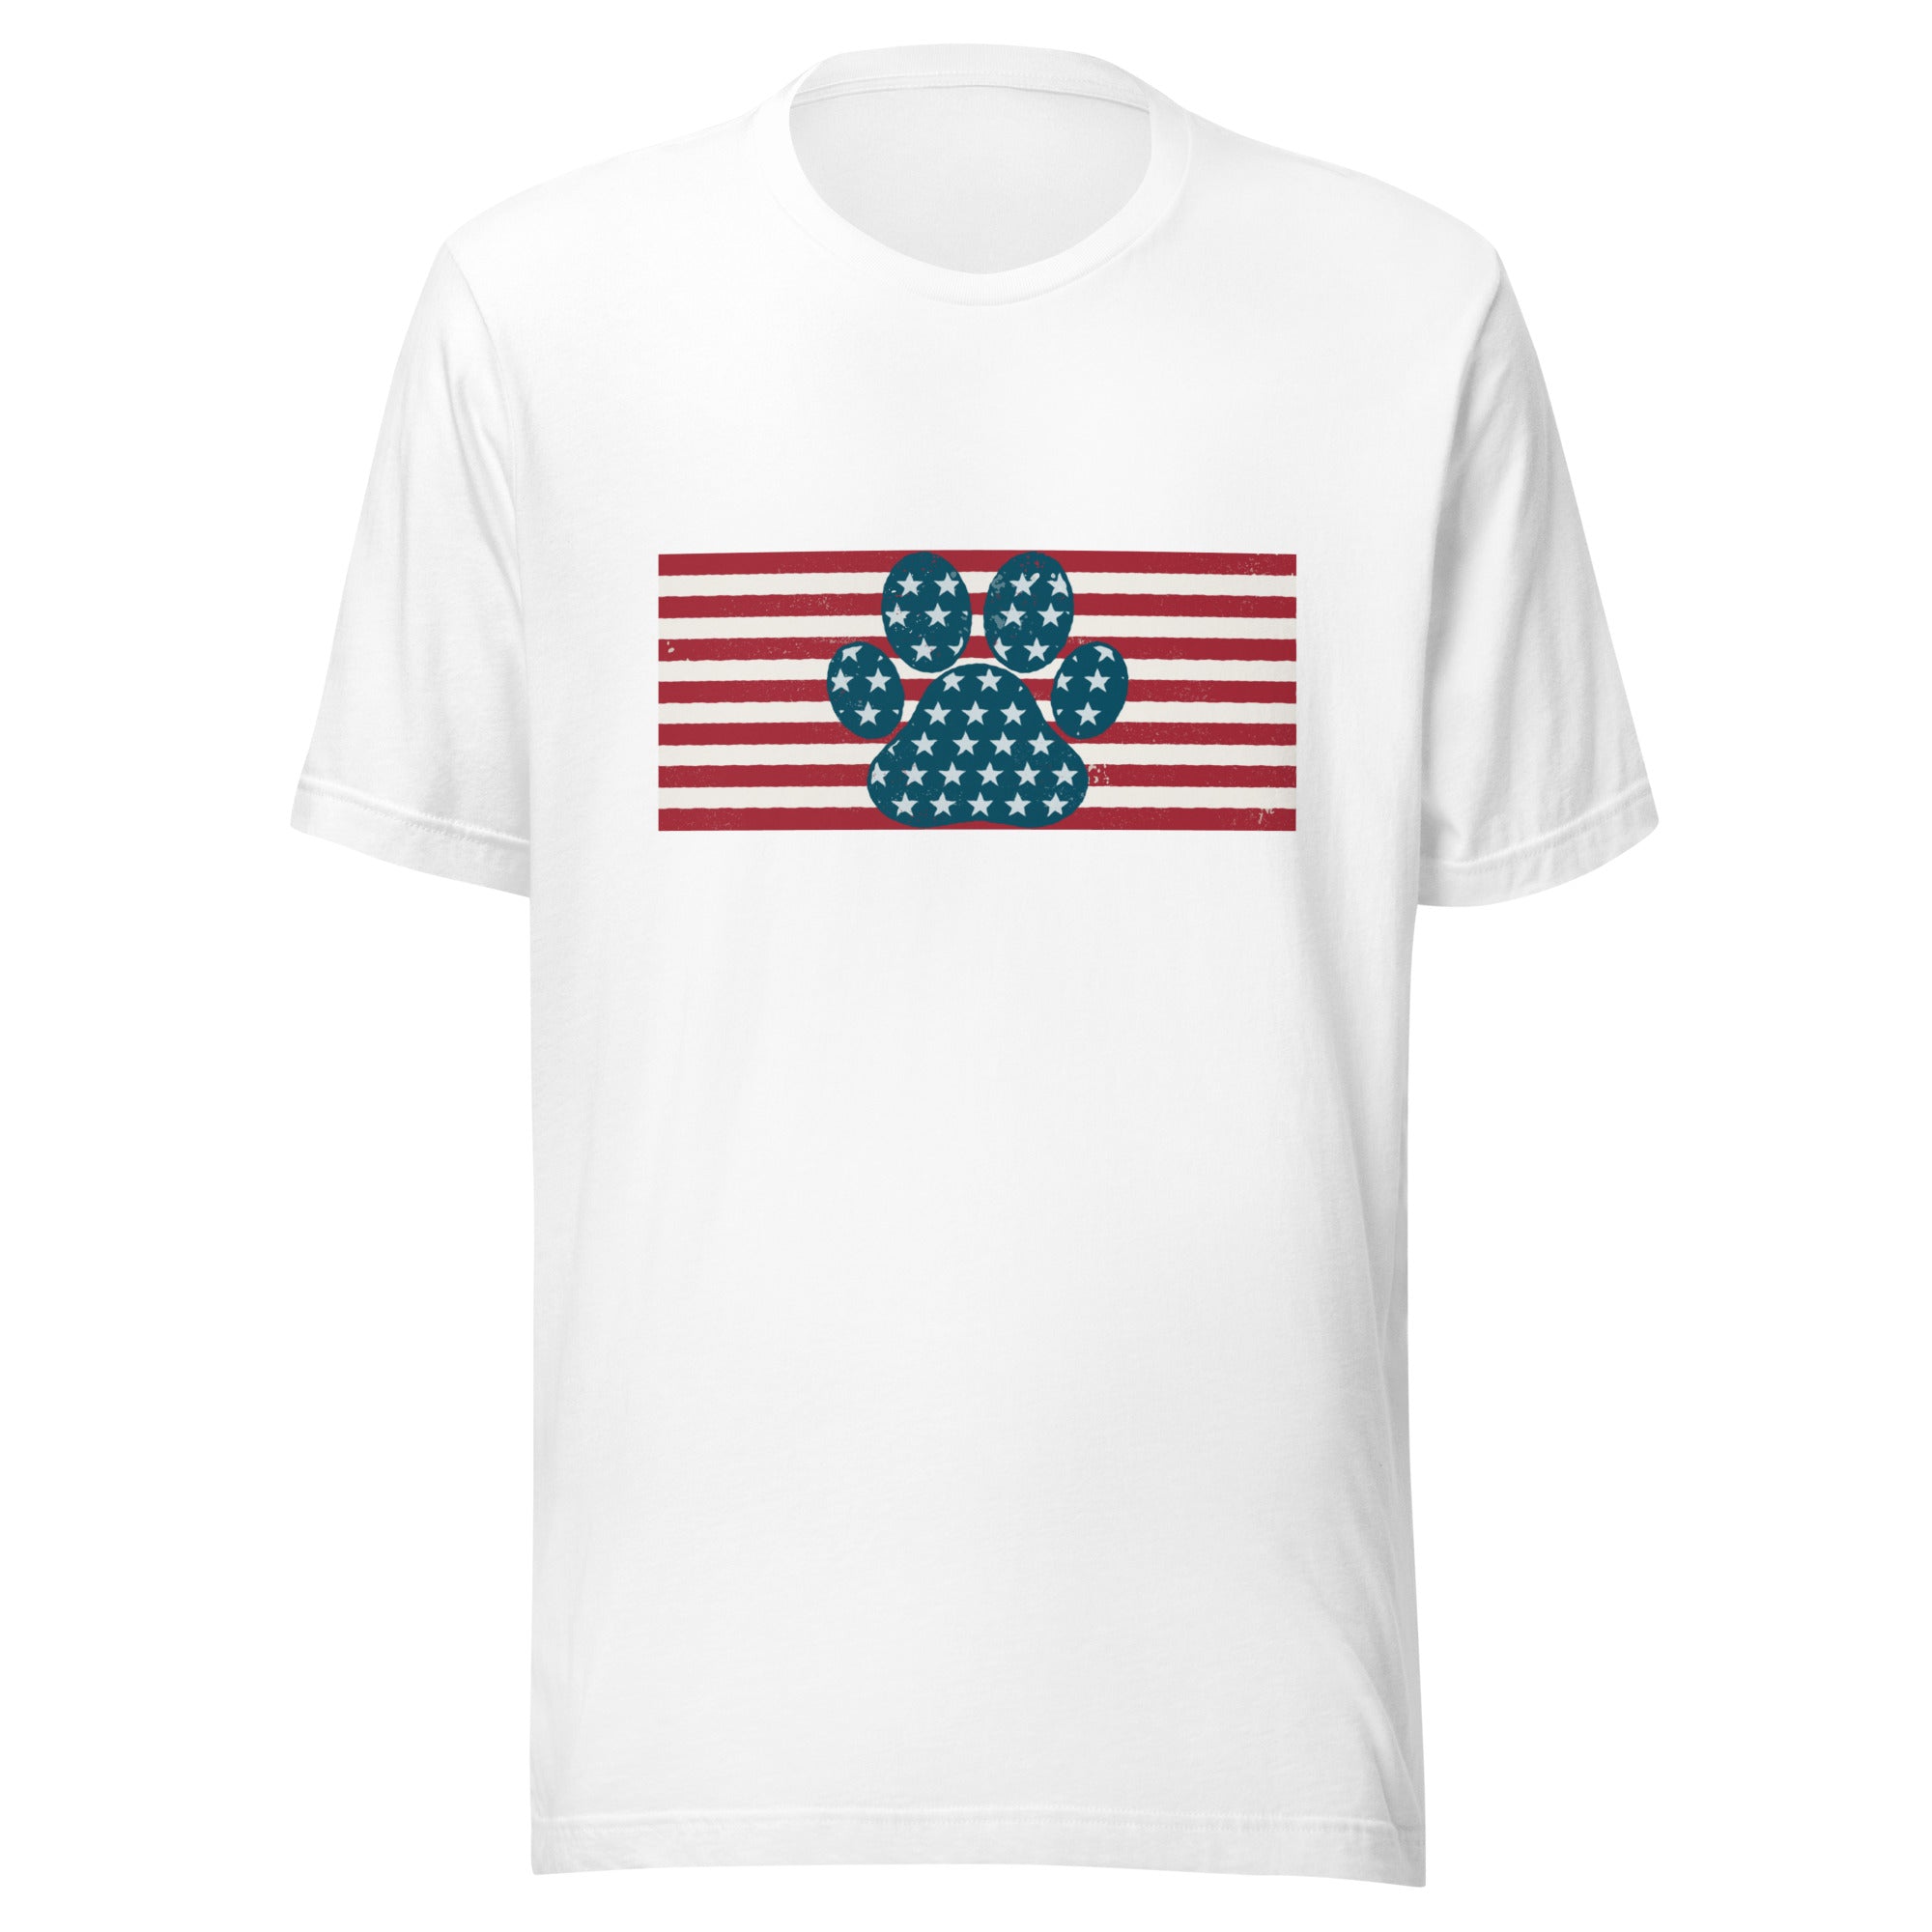 Limited Edition Service Dog Unisex USA Shirt